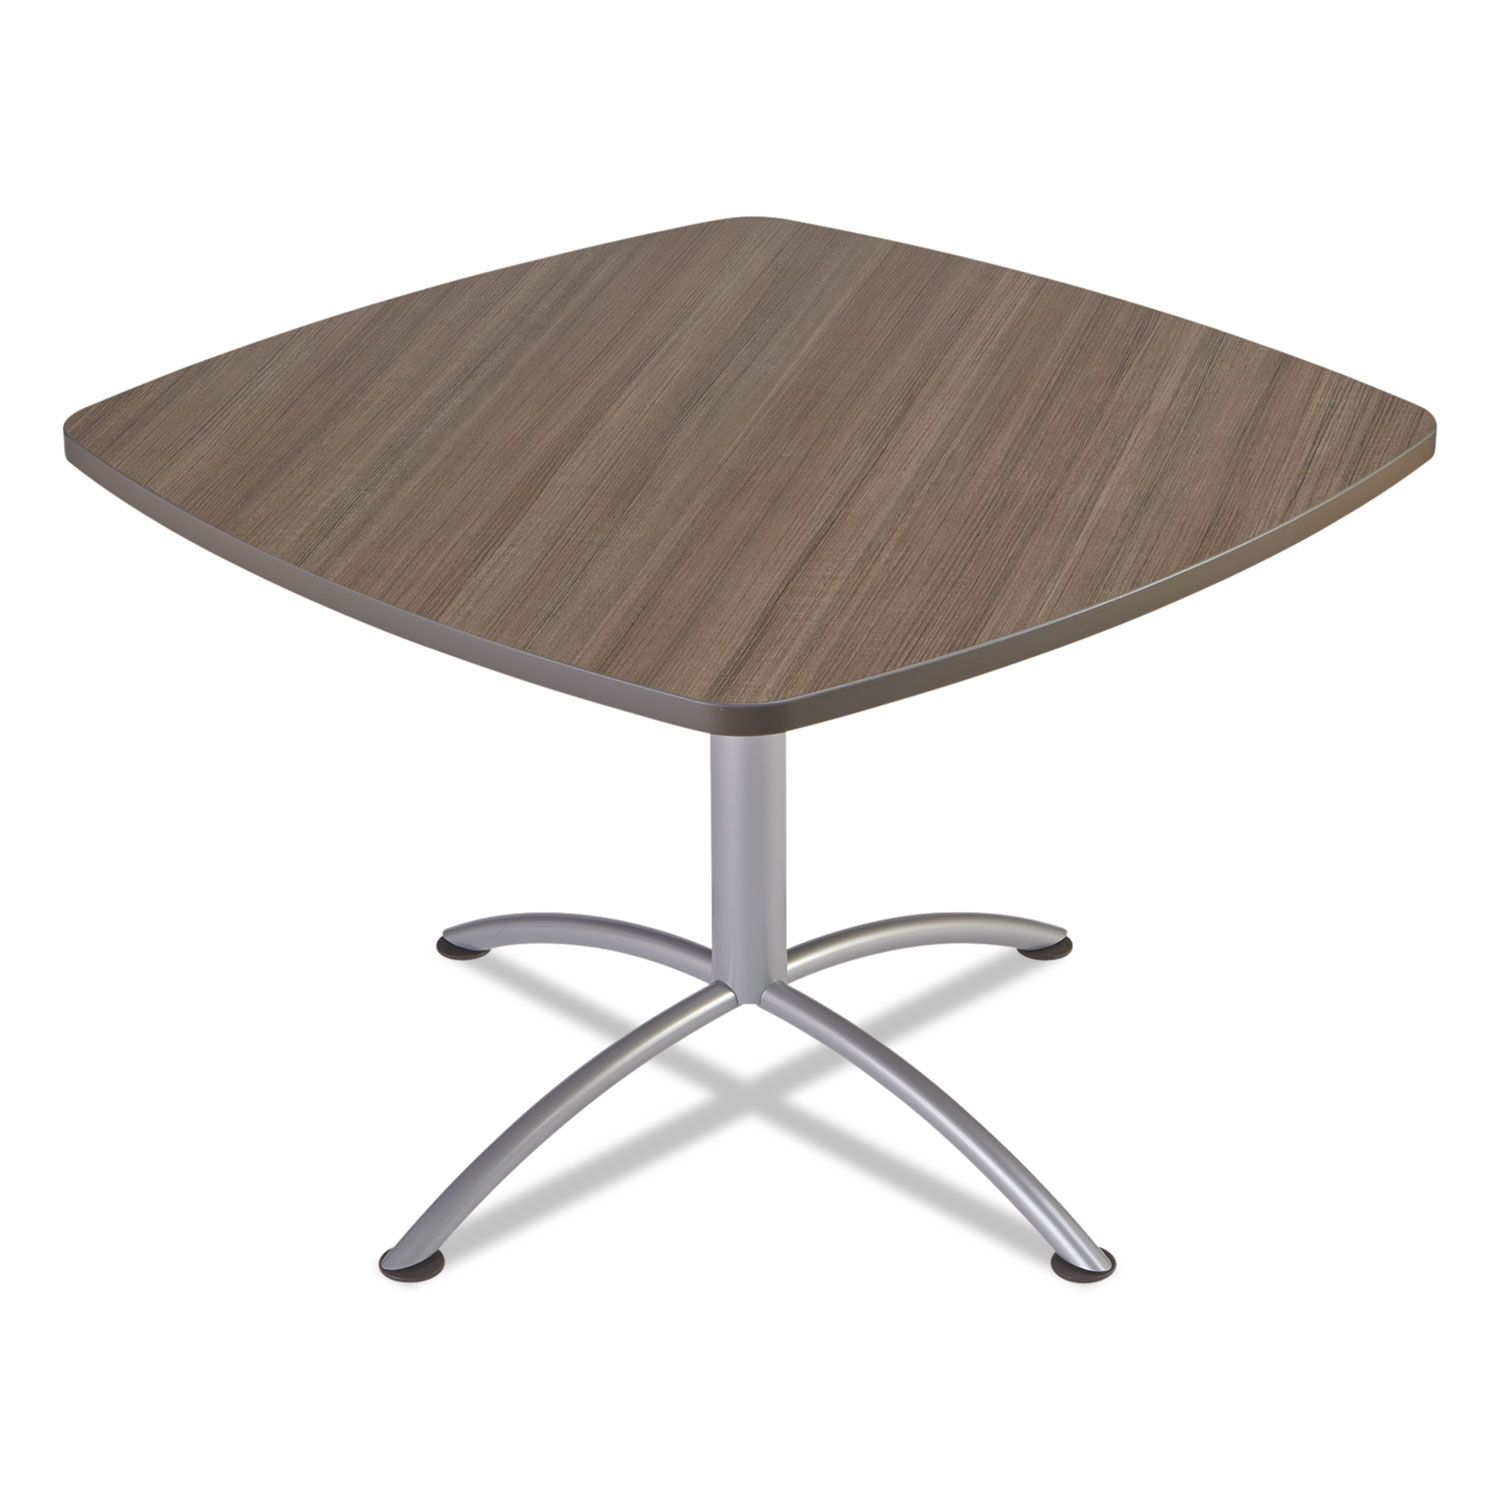 iLand Table, Contour, Square Seated Style, 42